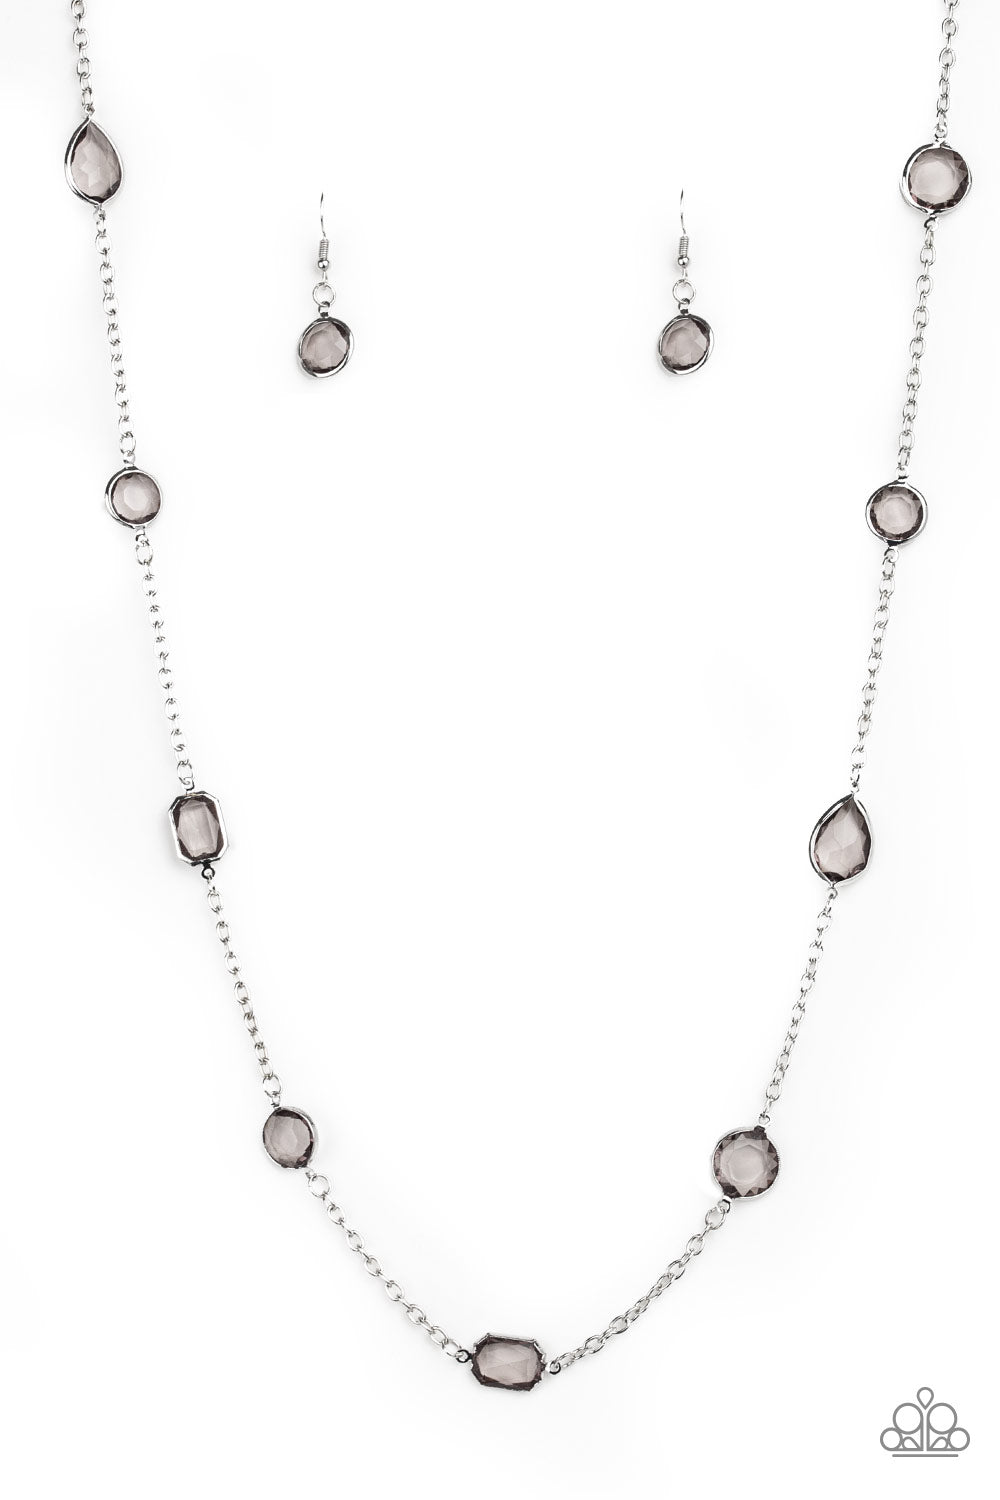 Glassy Glamorous - Silver Necklace freeshipping - JewLz4u Gemstone Gallery